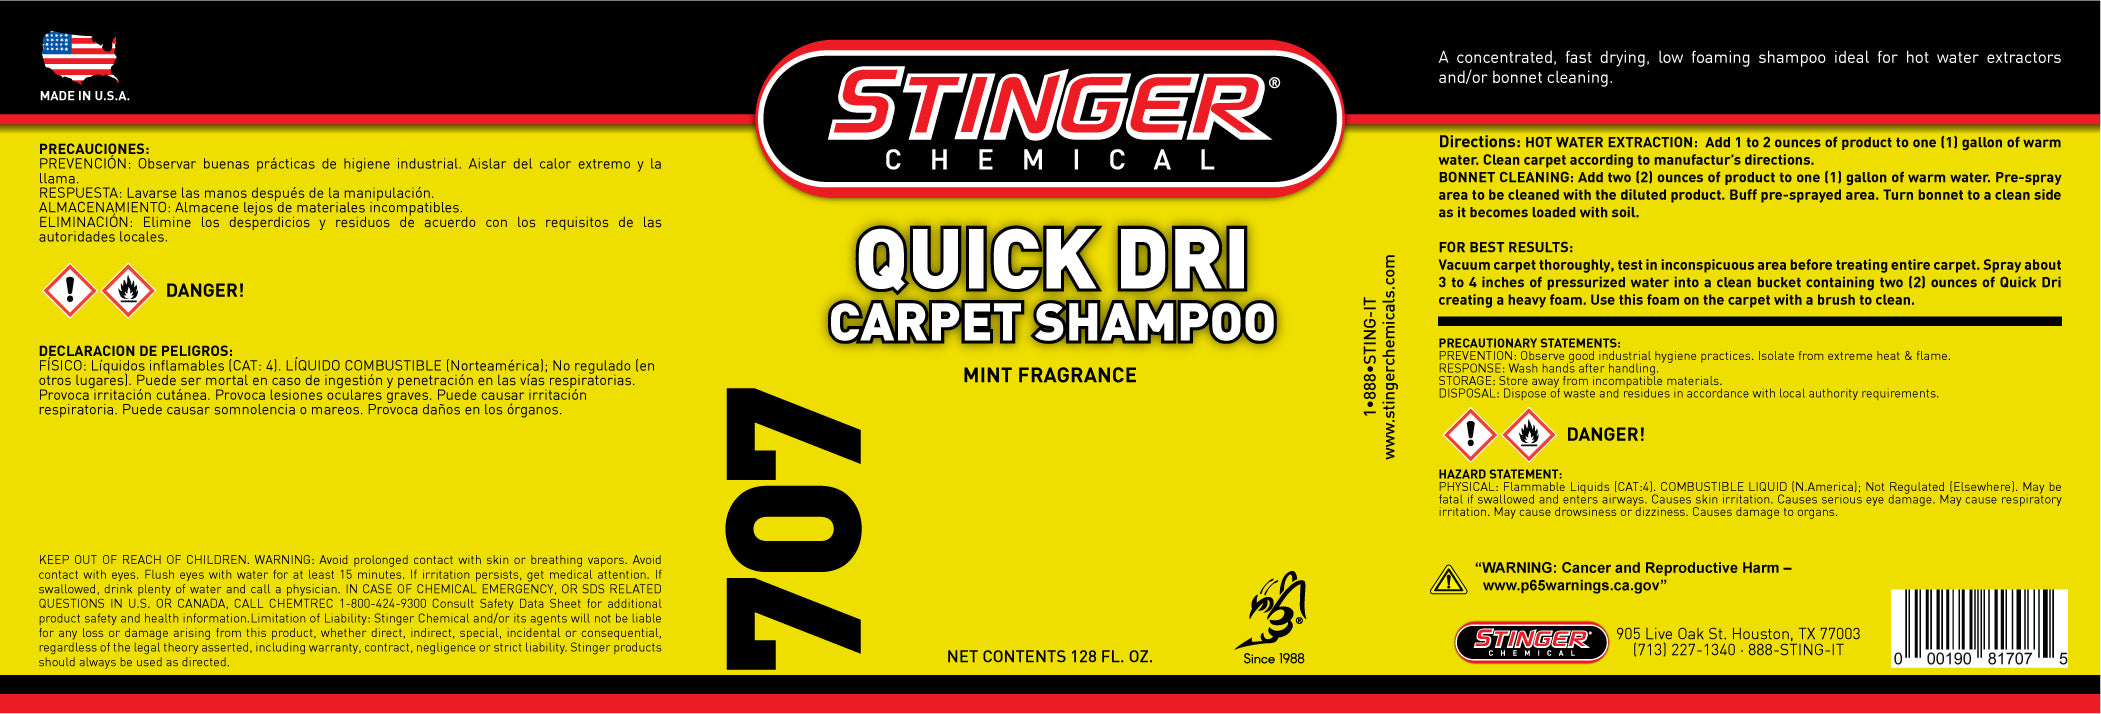 stinger-707-label